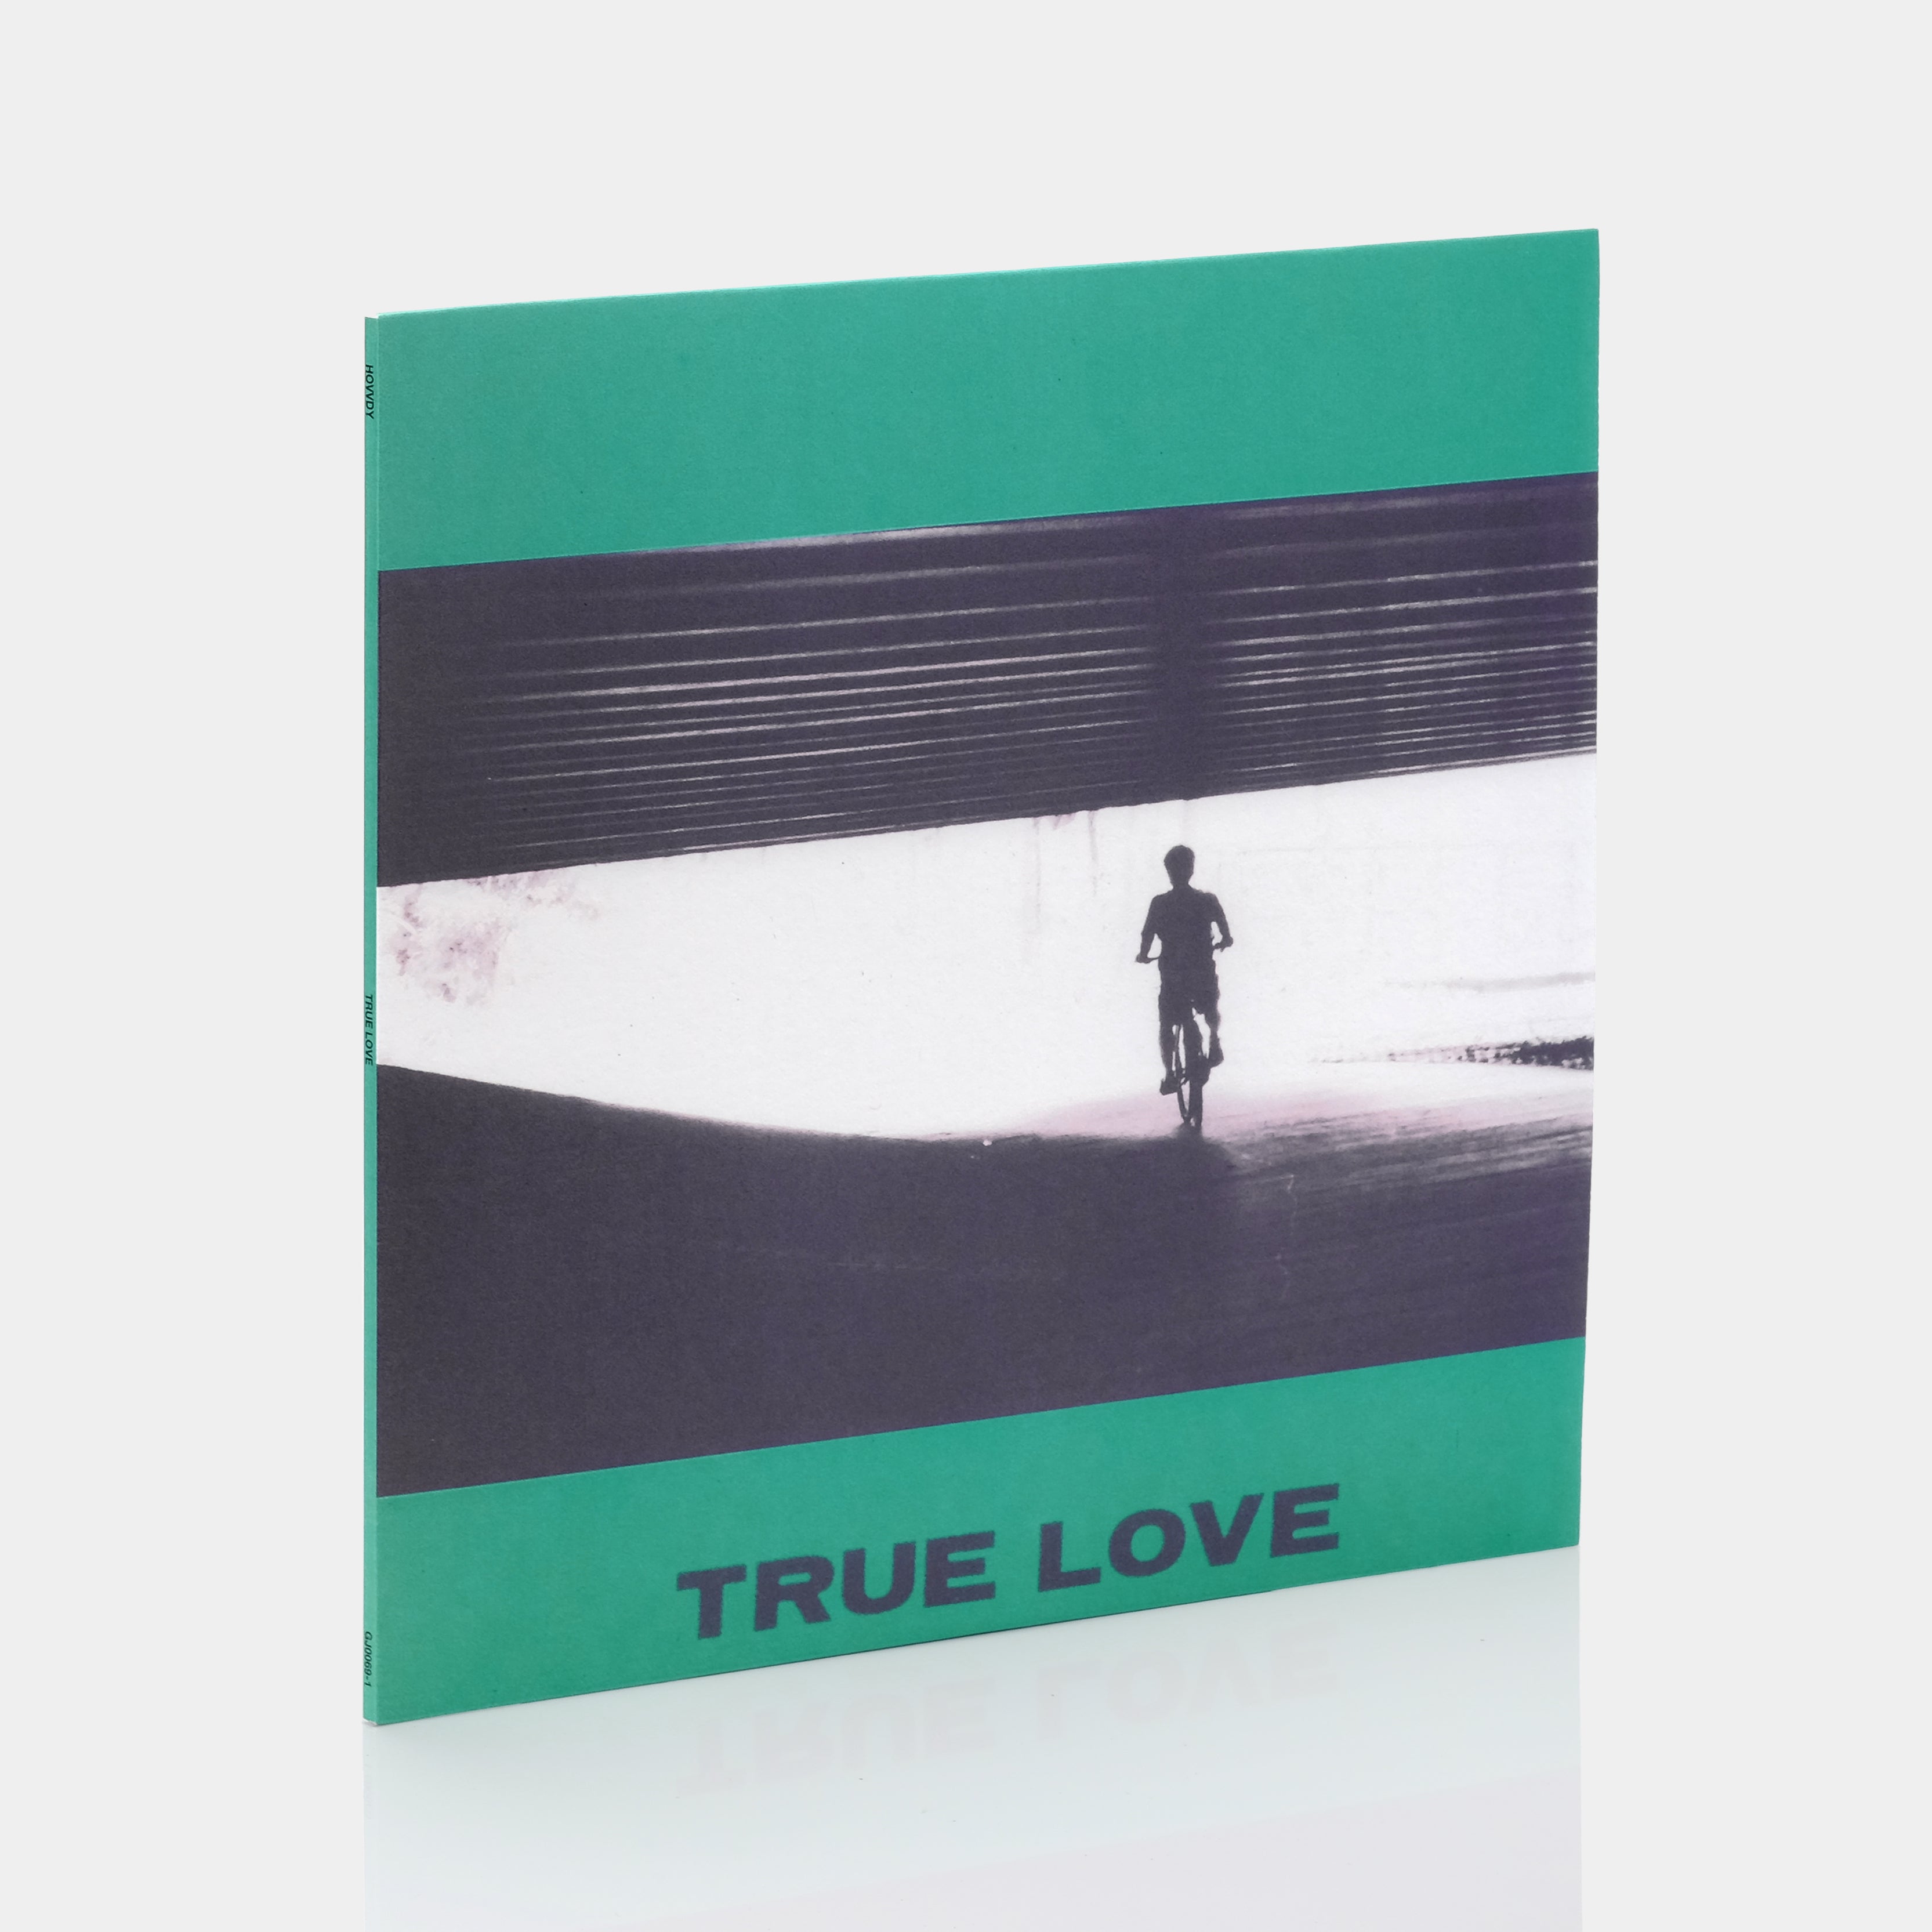 Hovvdy - True Love LP Hot Pink Vinyl Record